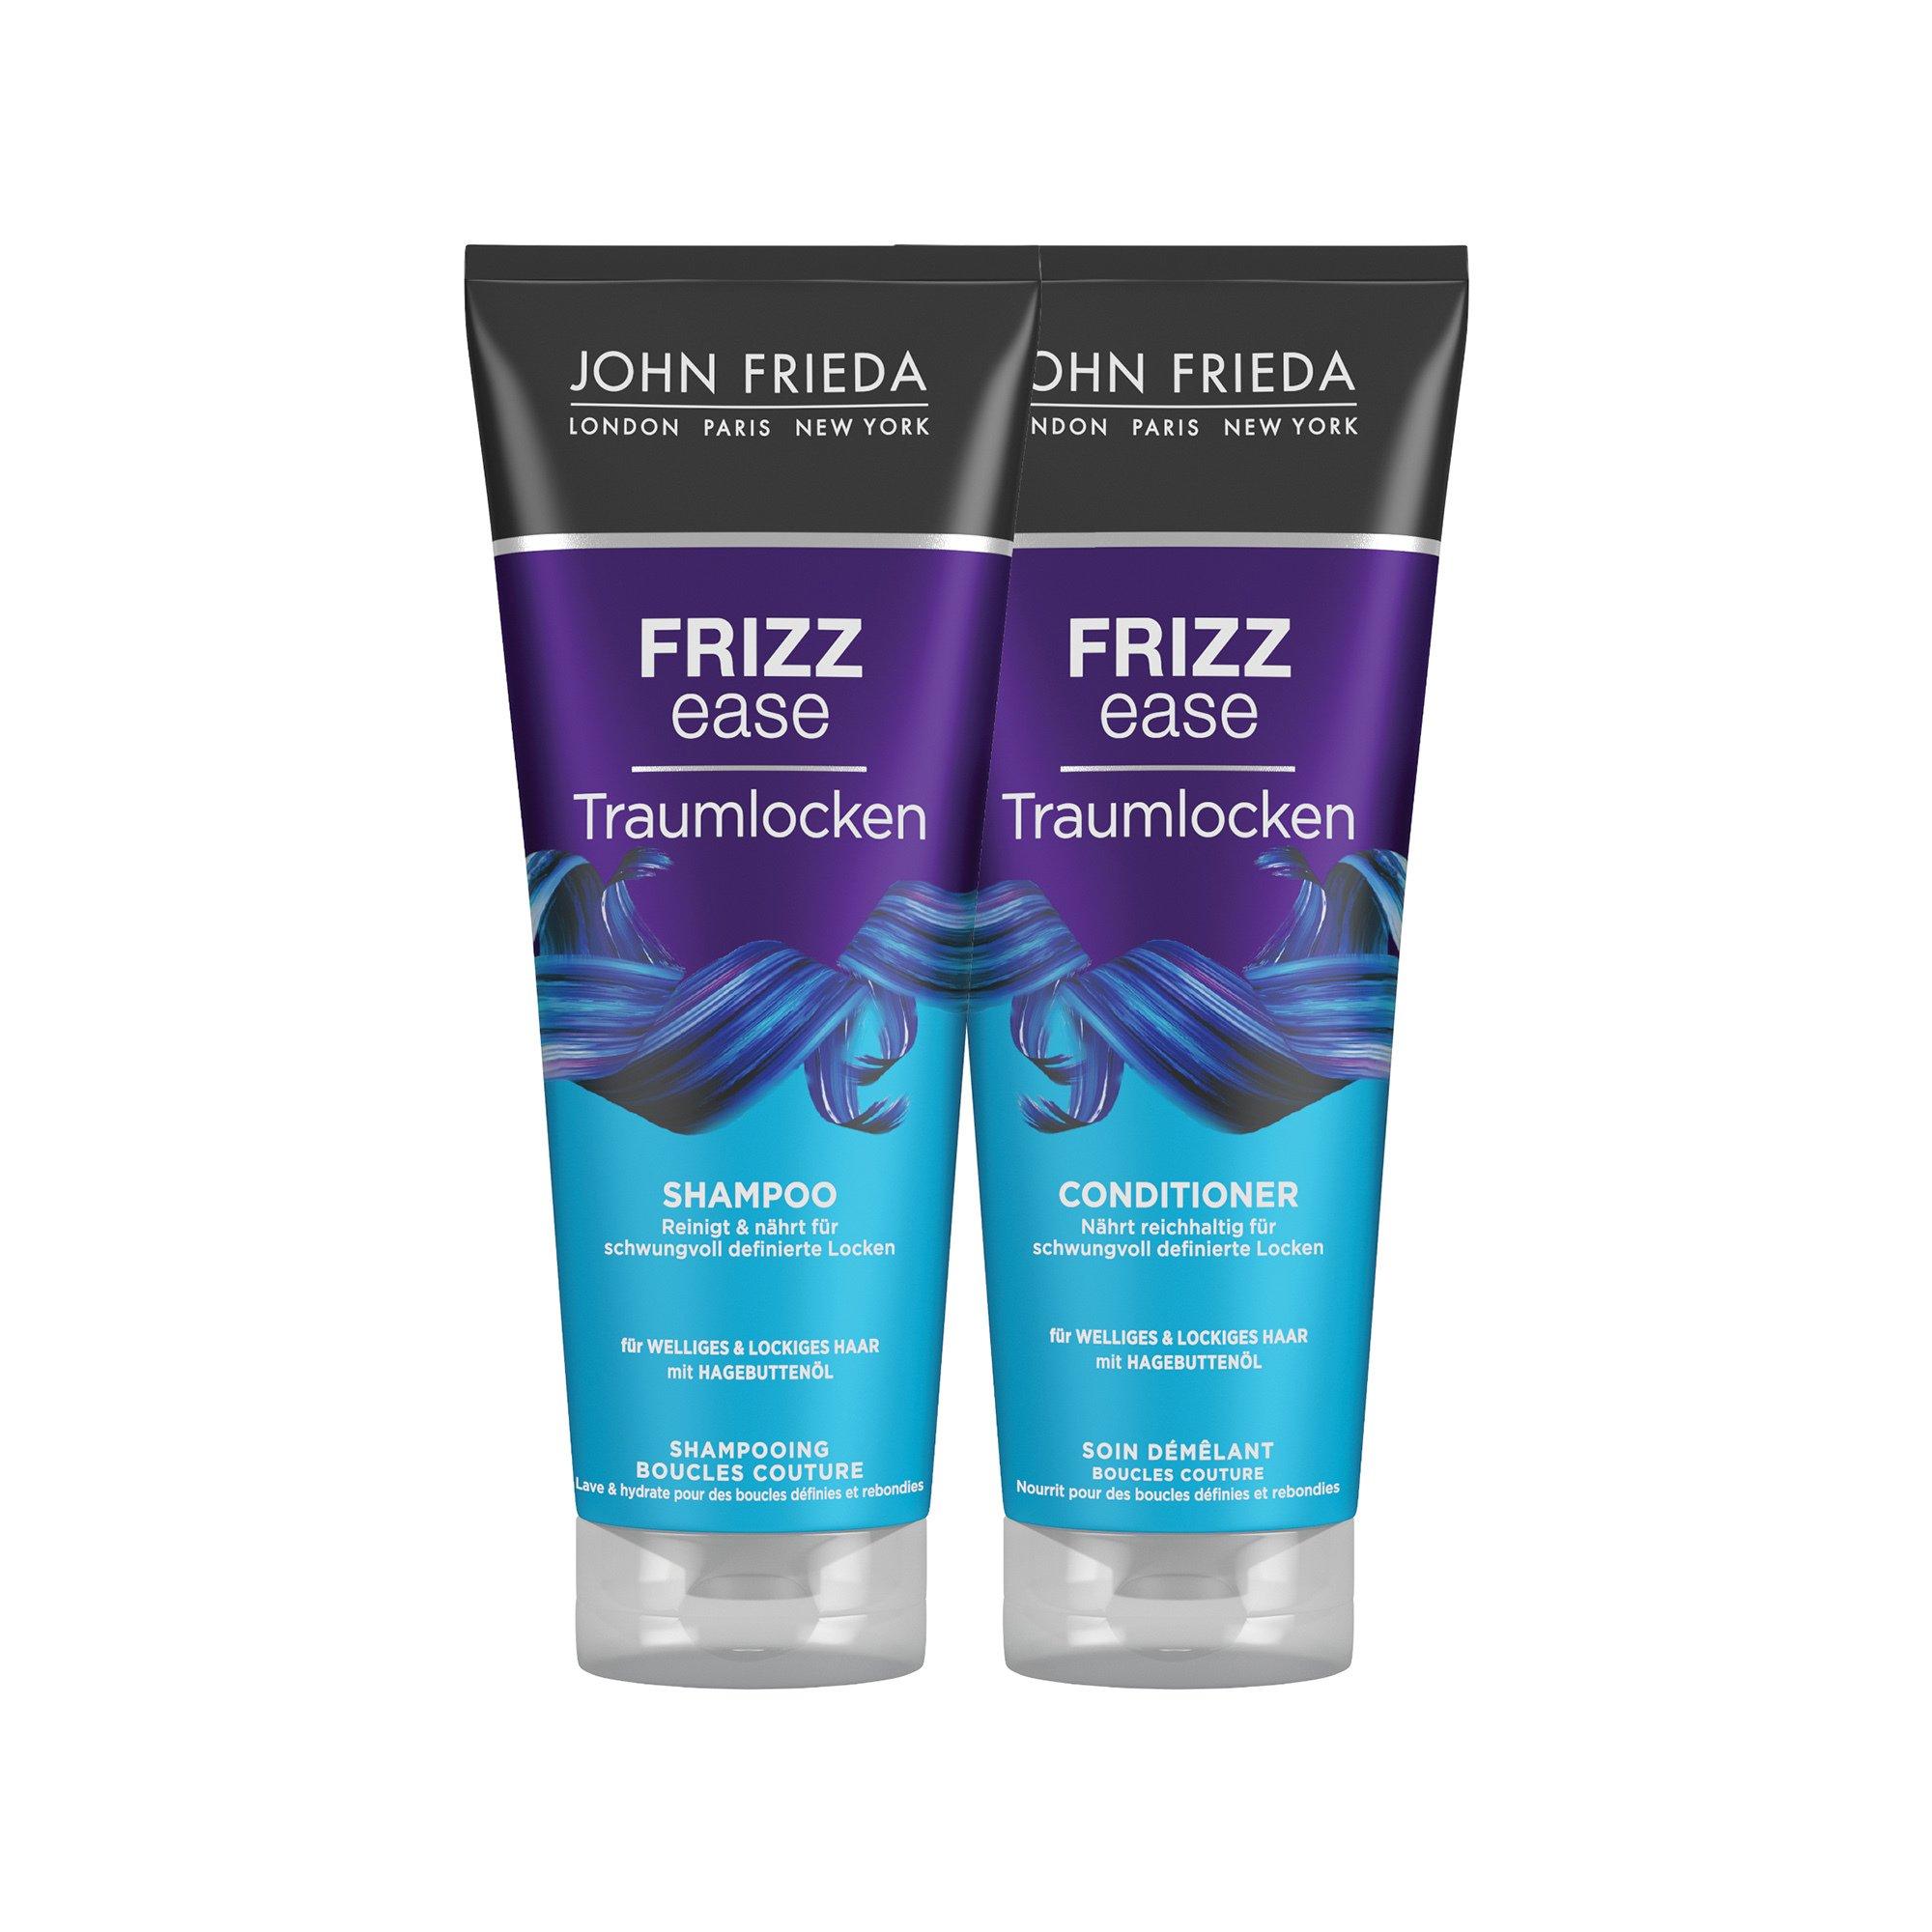 JOHN FRIEDA  Frizz Ease Duo Traumlocken Shampoo + Conditioner  